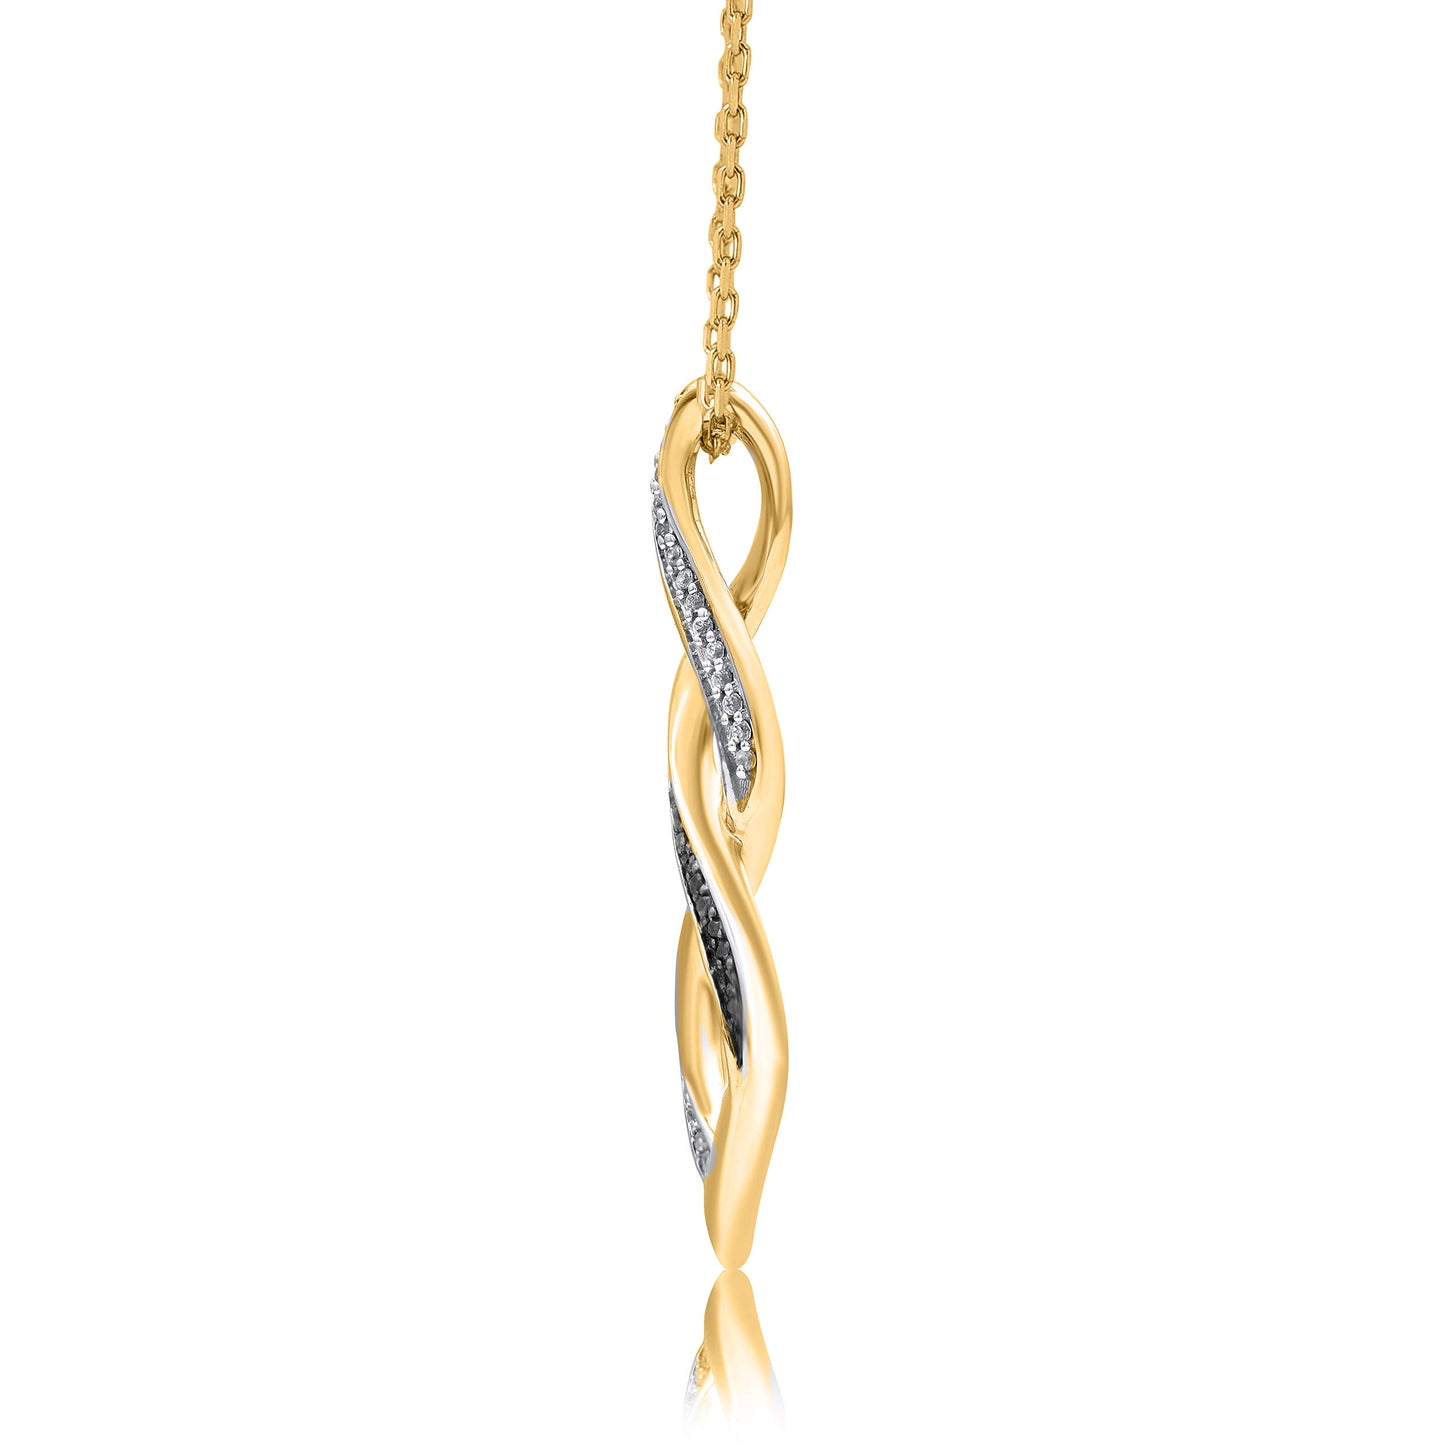 Treated Black Diamond Infinity Swirl Pendant Necklace in 10K Gold